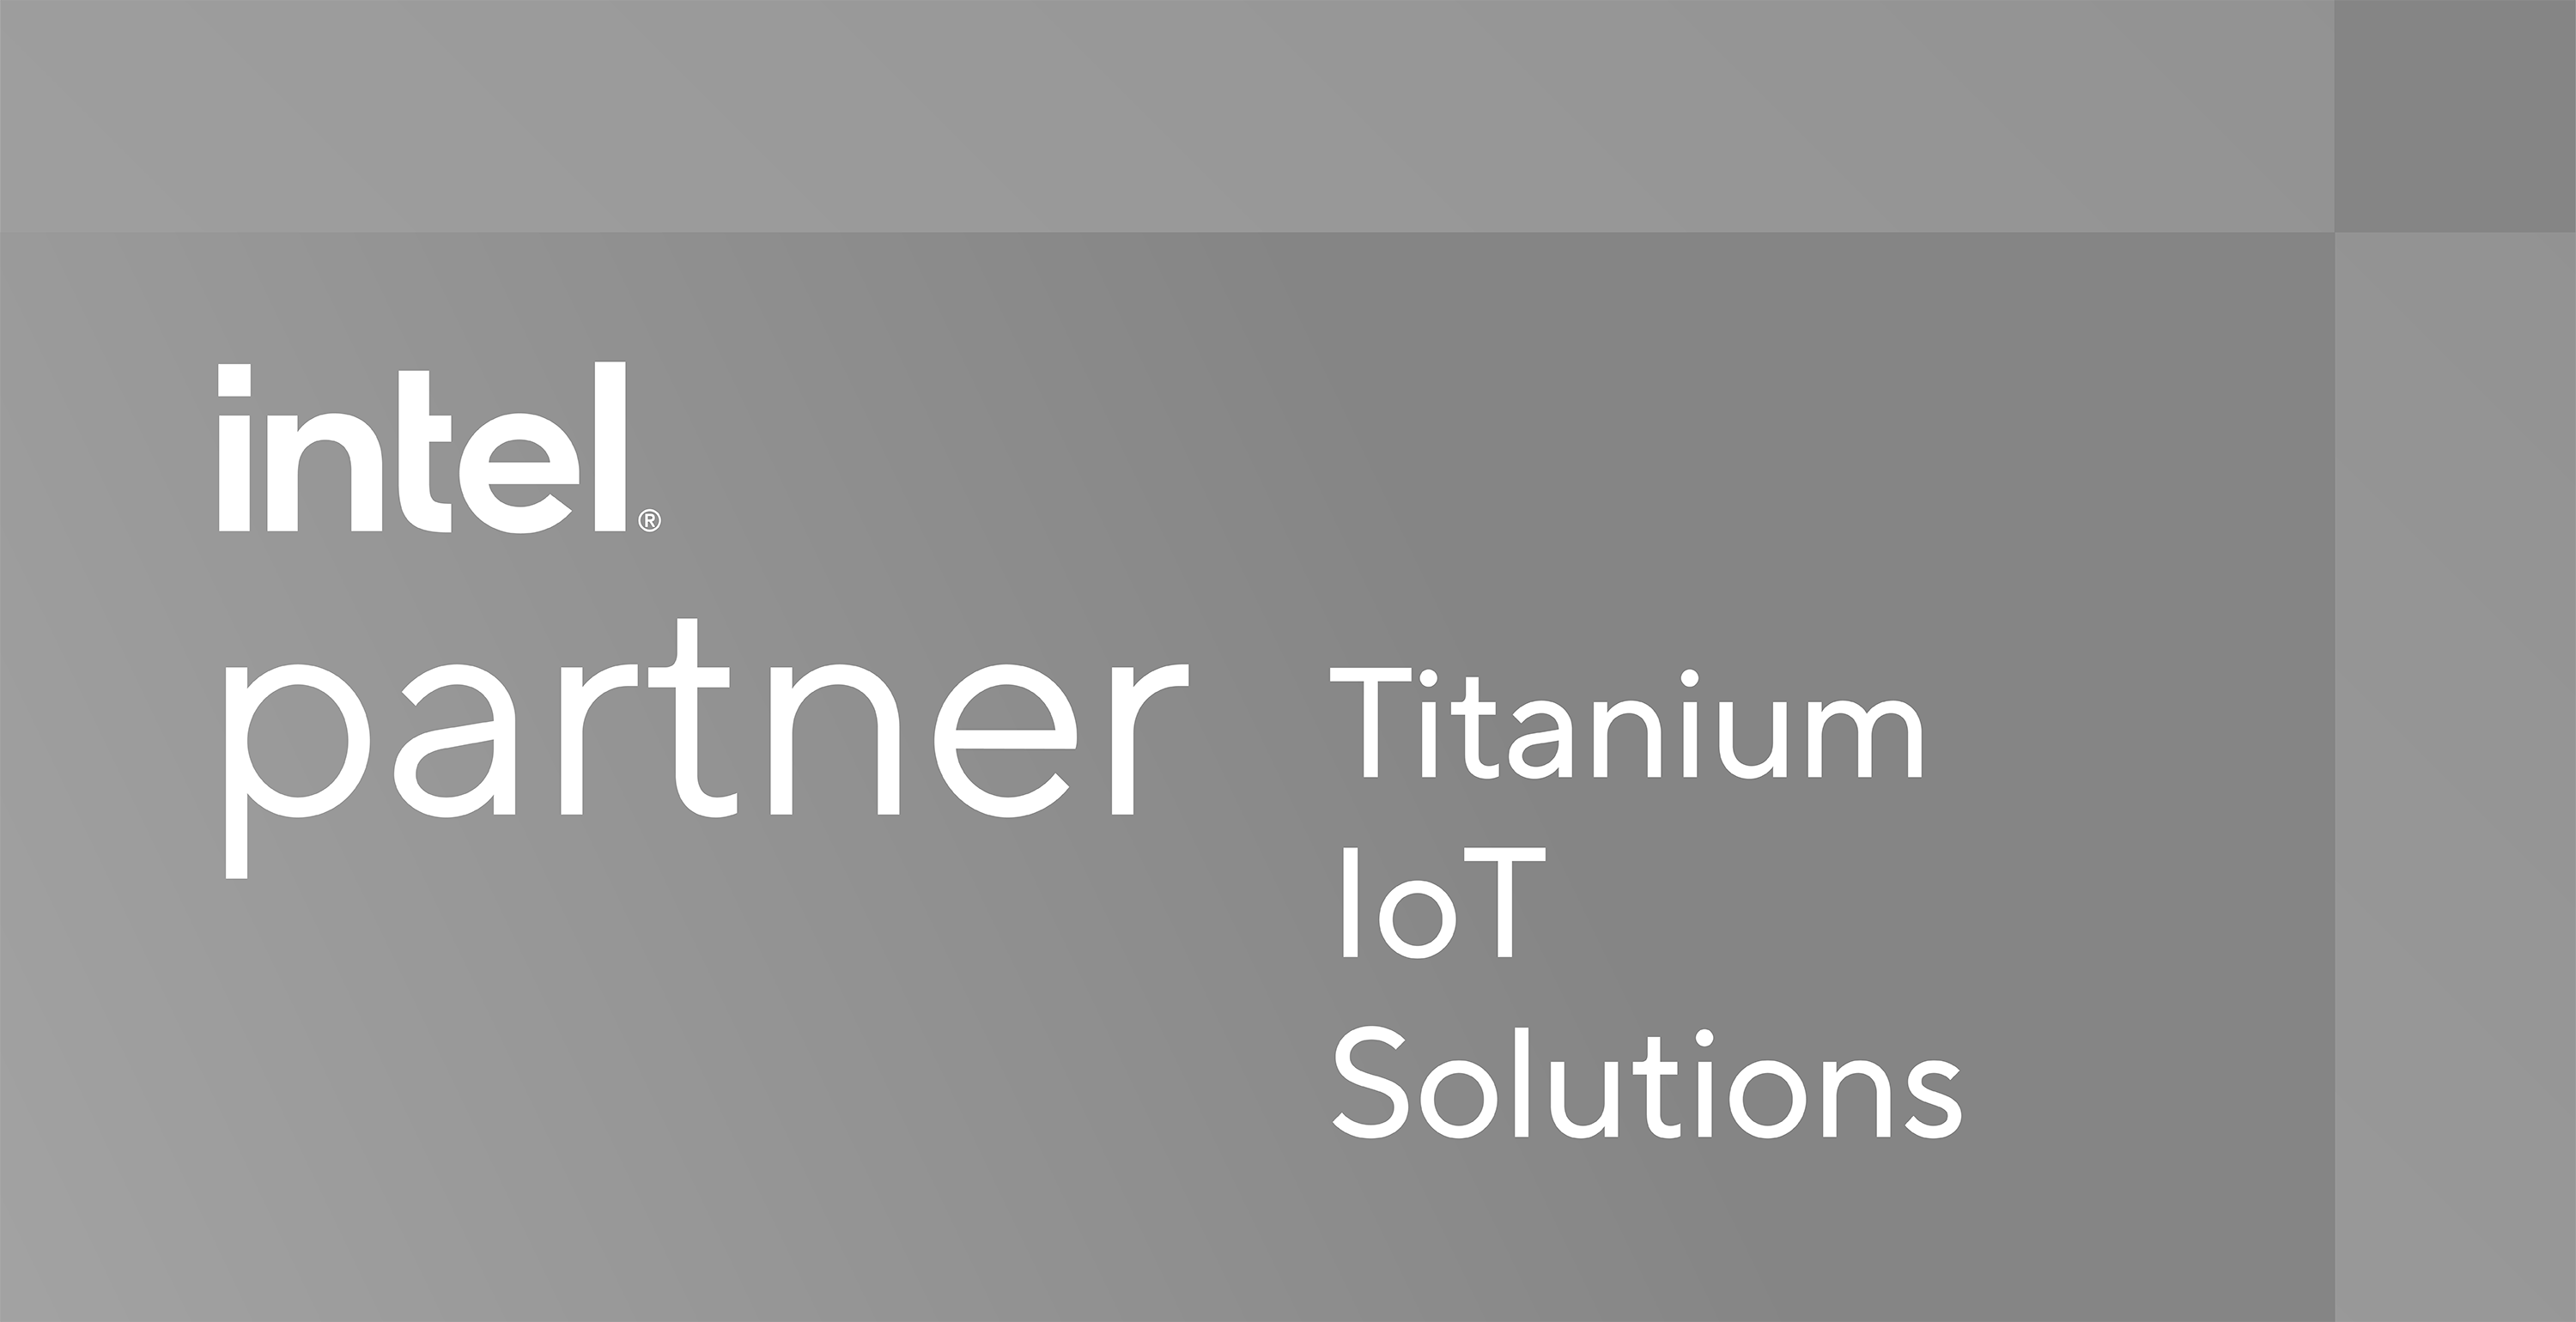 Intel Partner Titanium loT Solutions 2 tone gray logo